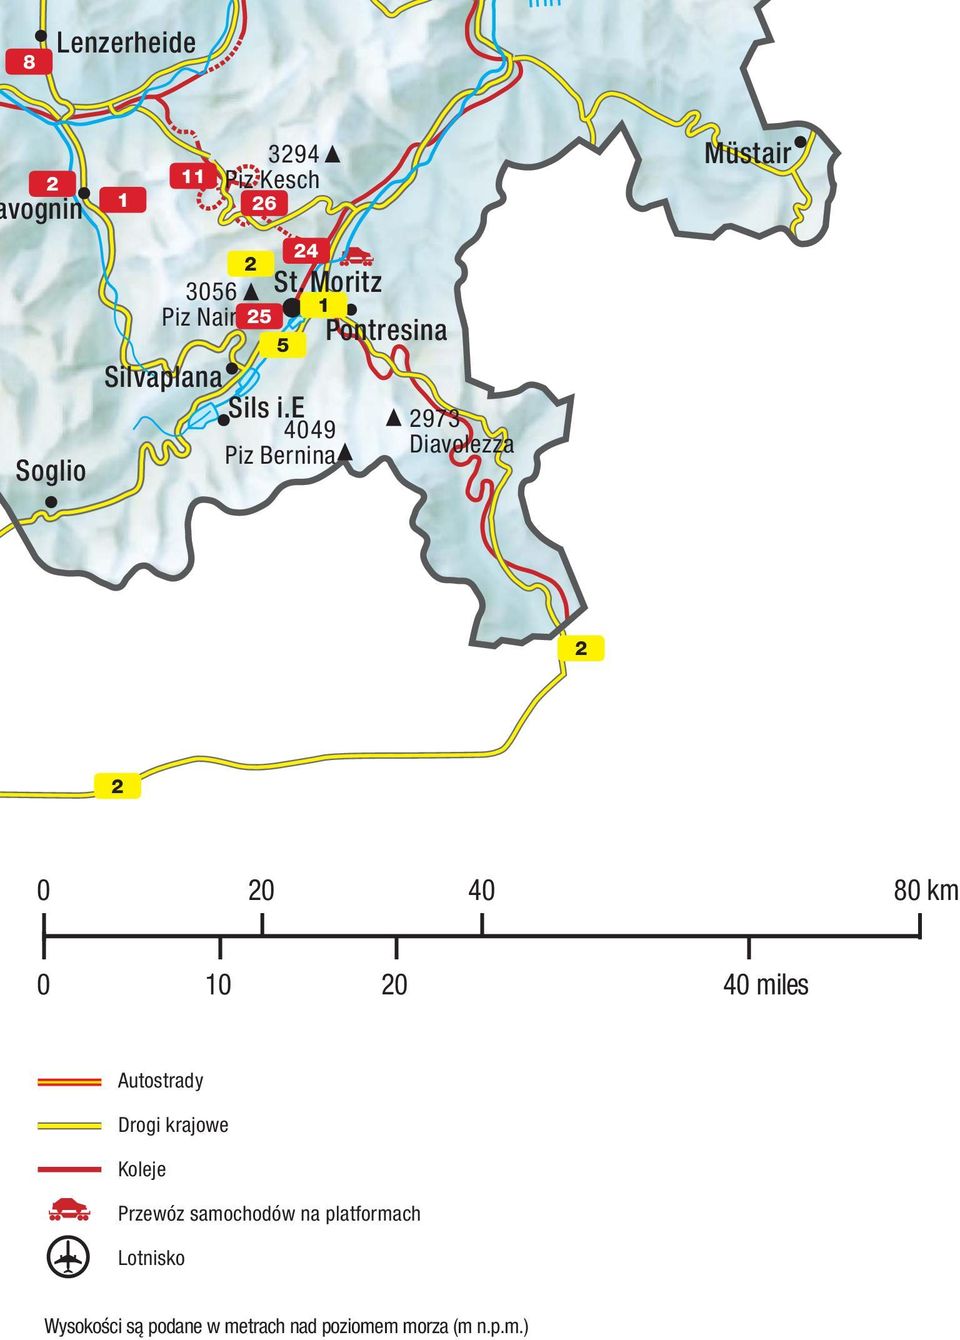 e 4049 Piz Bernina Pontresina 2973 Diavolezza Müstair 2 2 0 20 40 80 km 0 10 20 40